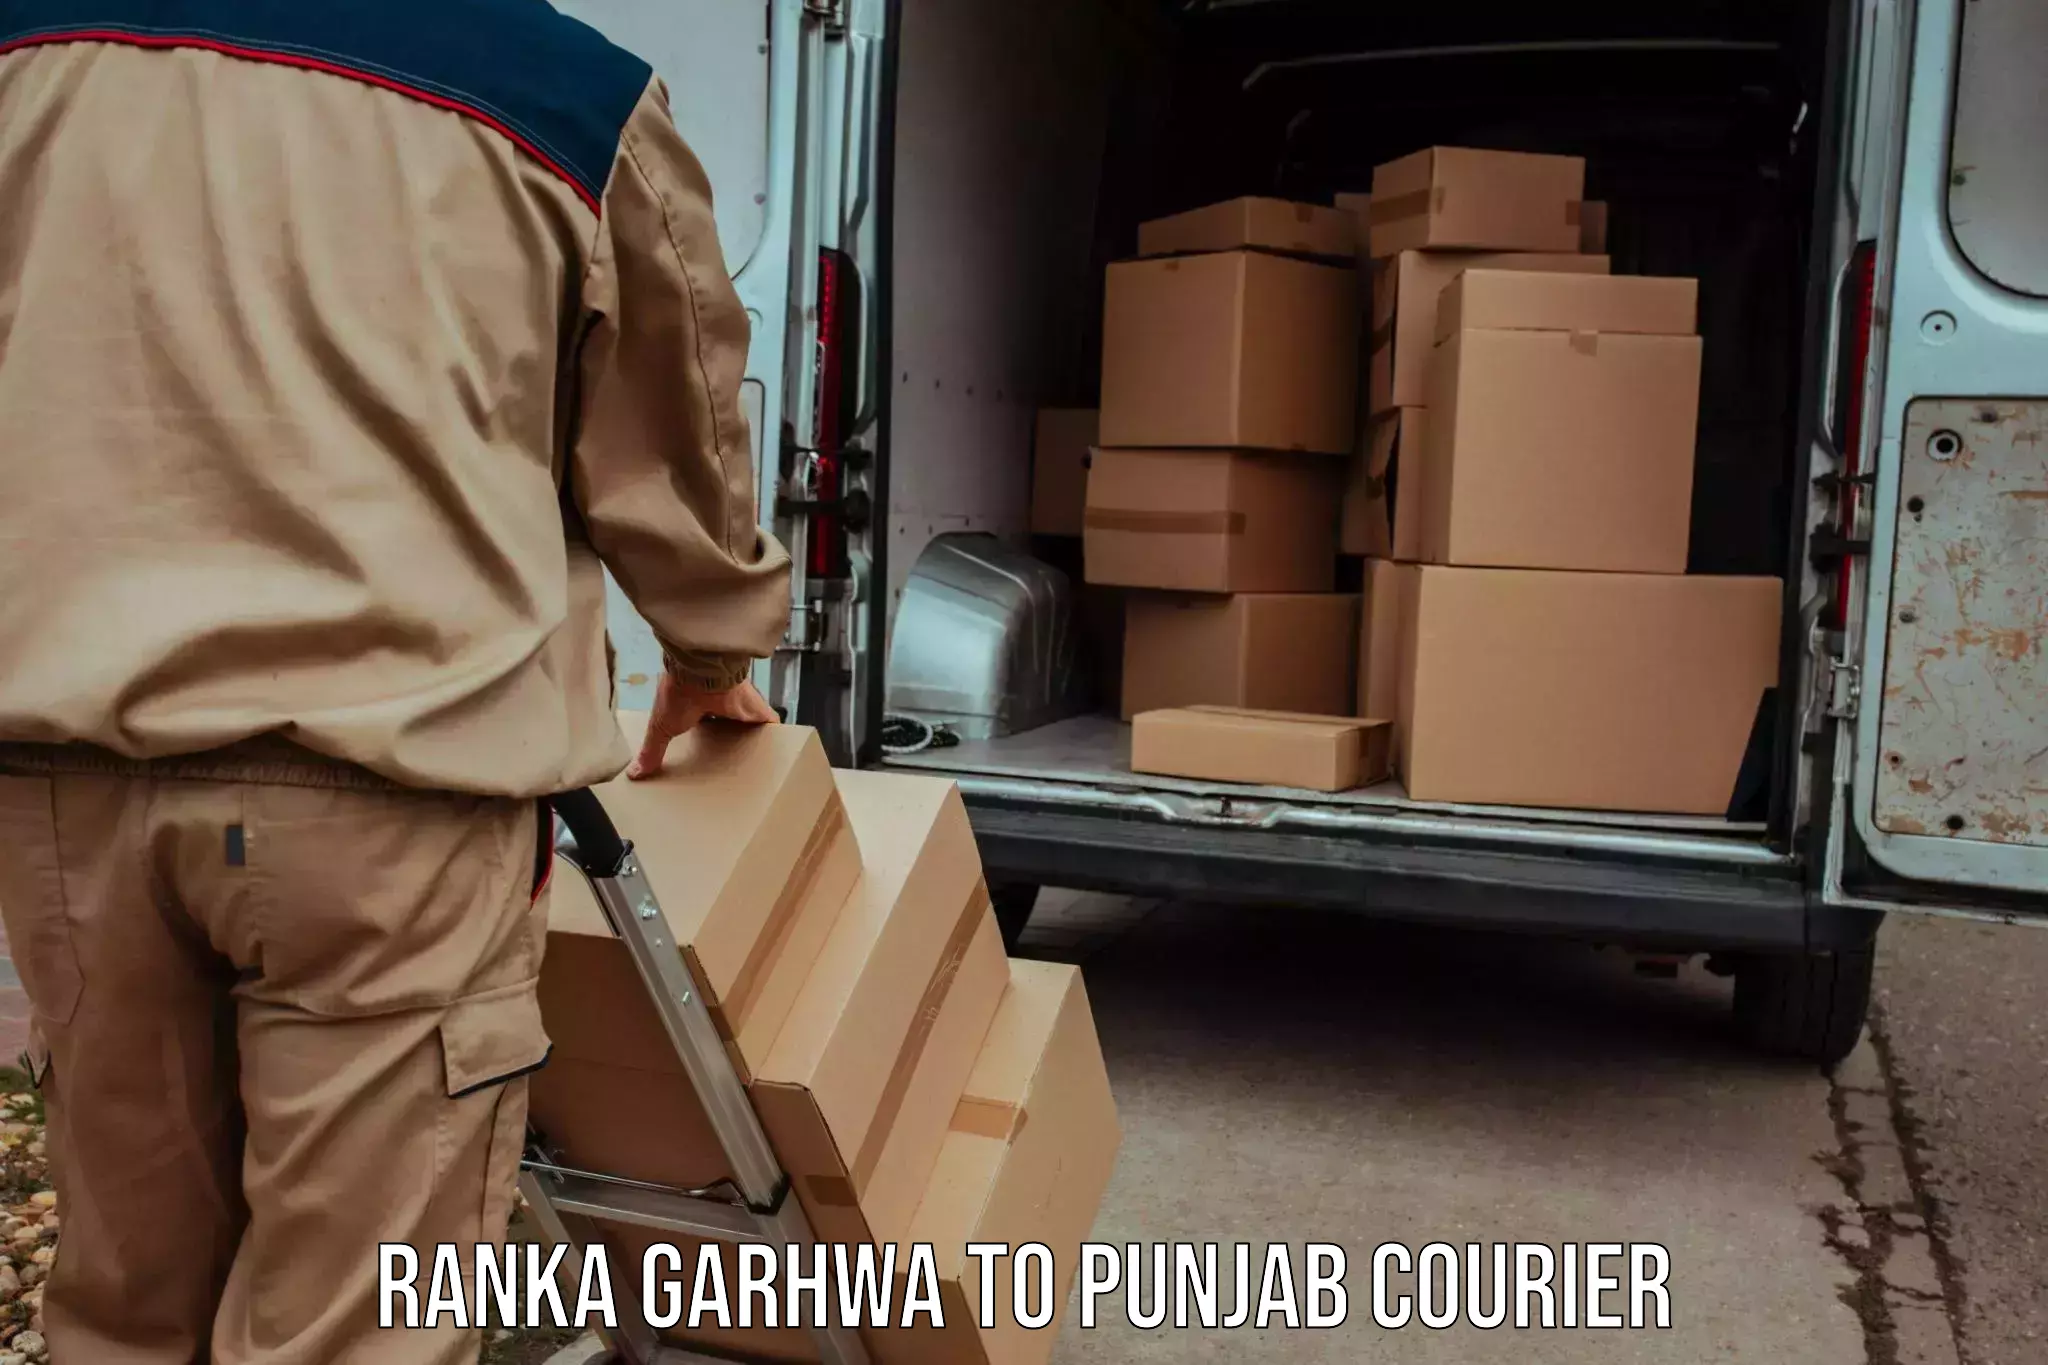 Global courier networks Ranka Garhwa to Raikot